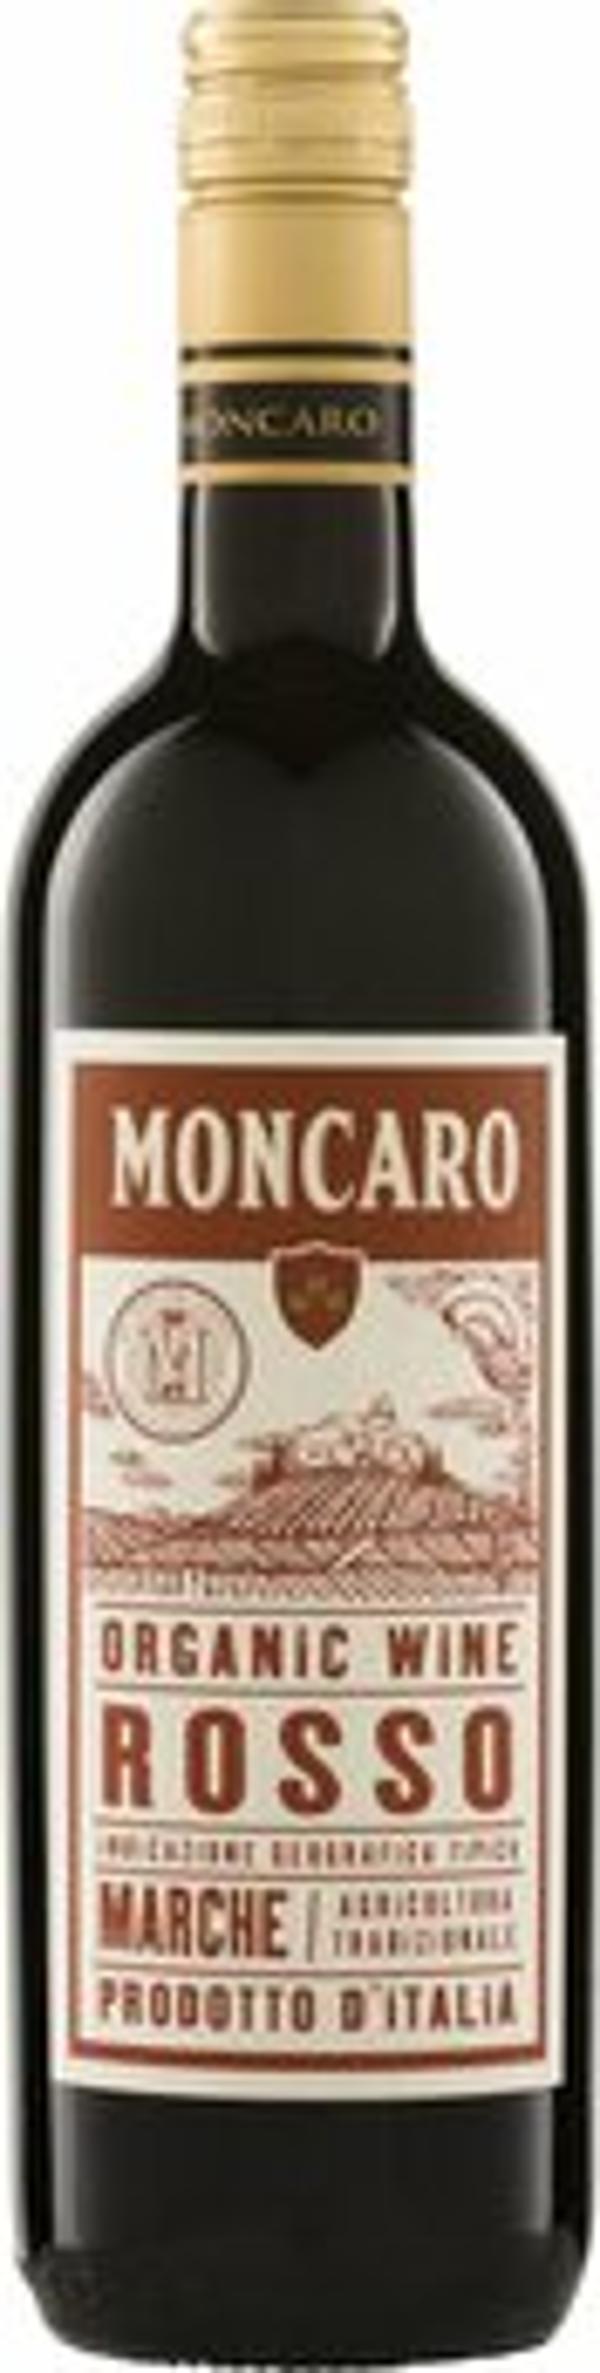 Produktfoto zu Marche Rosso IGT Moncaro 0,75l